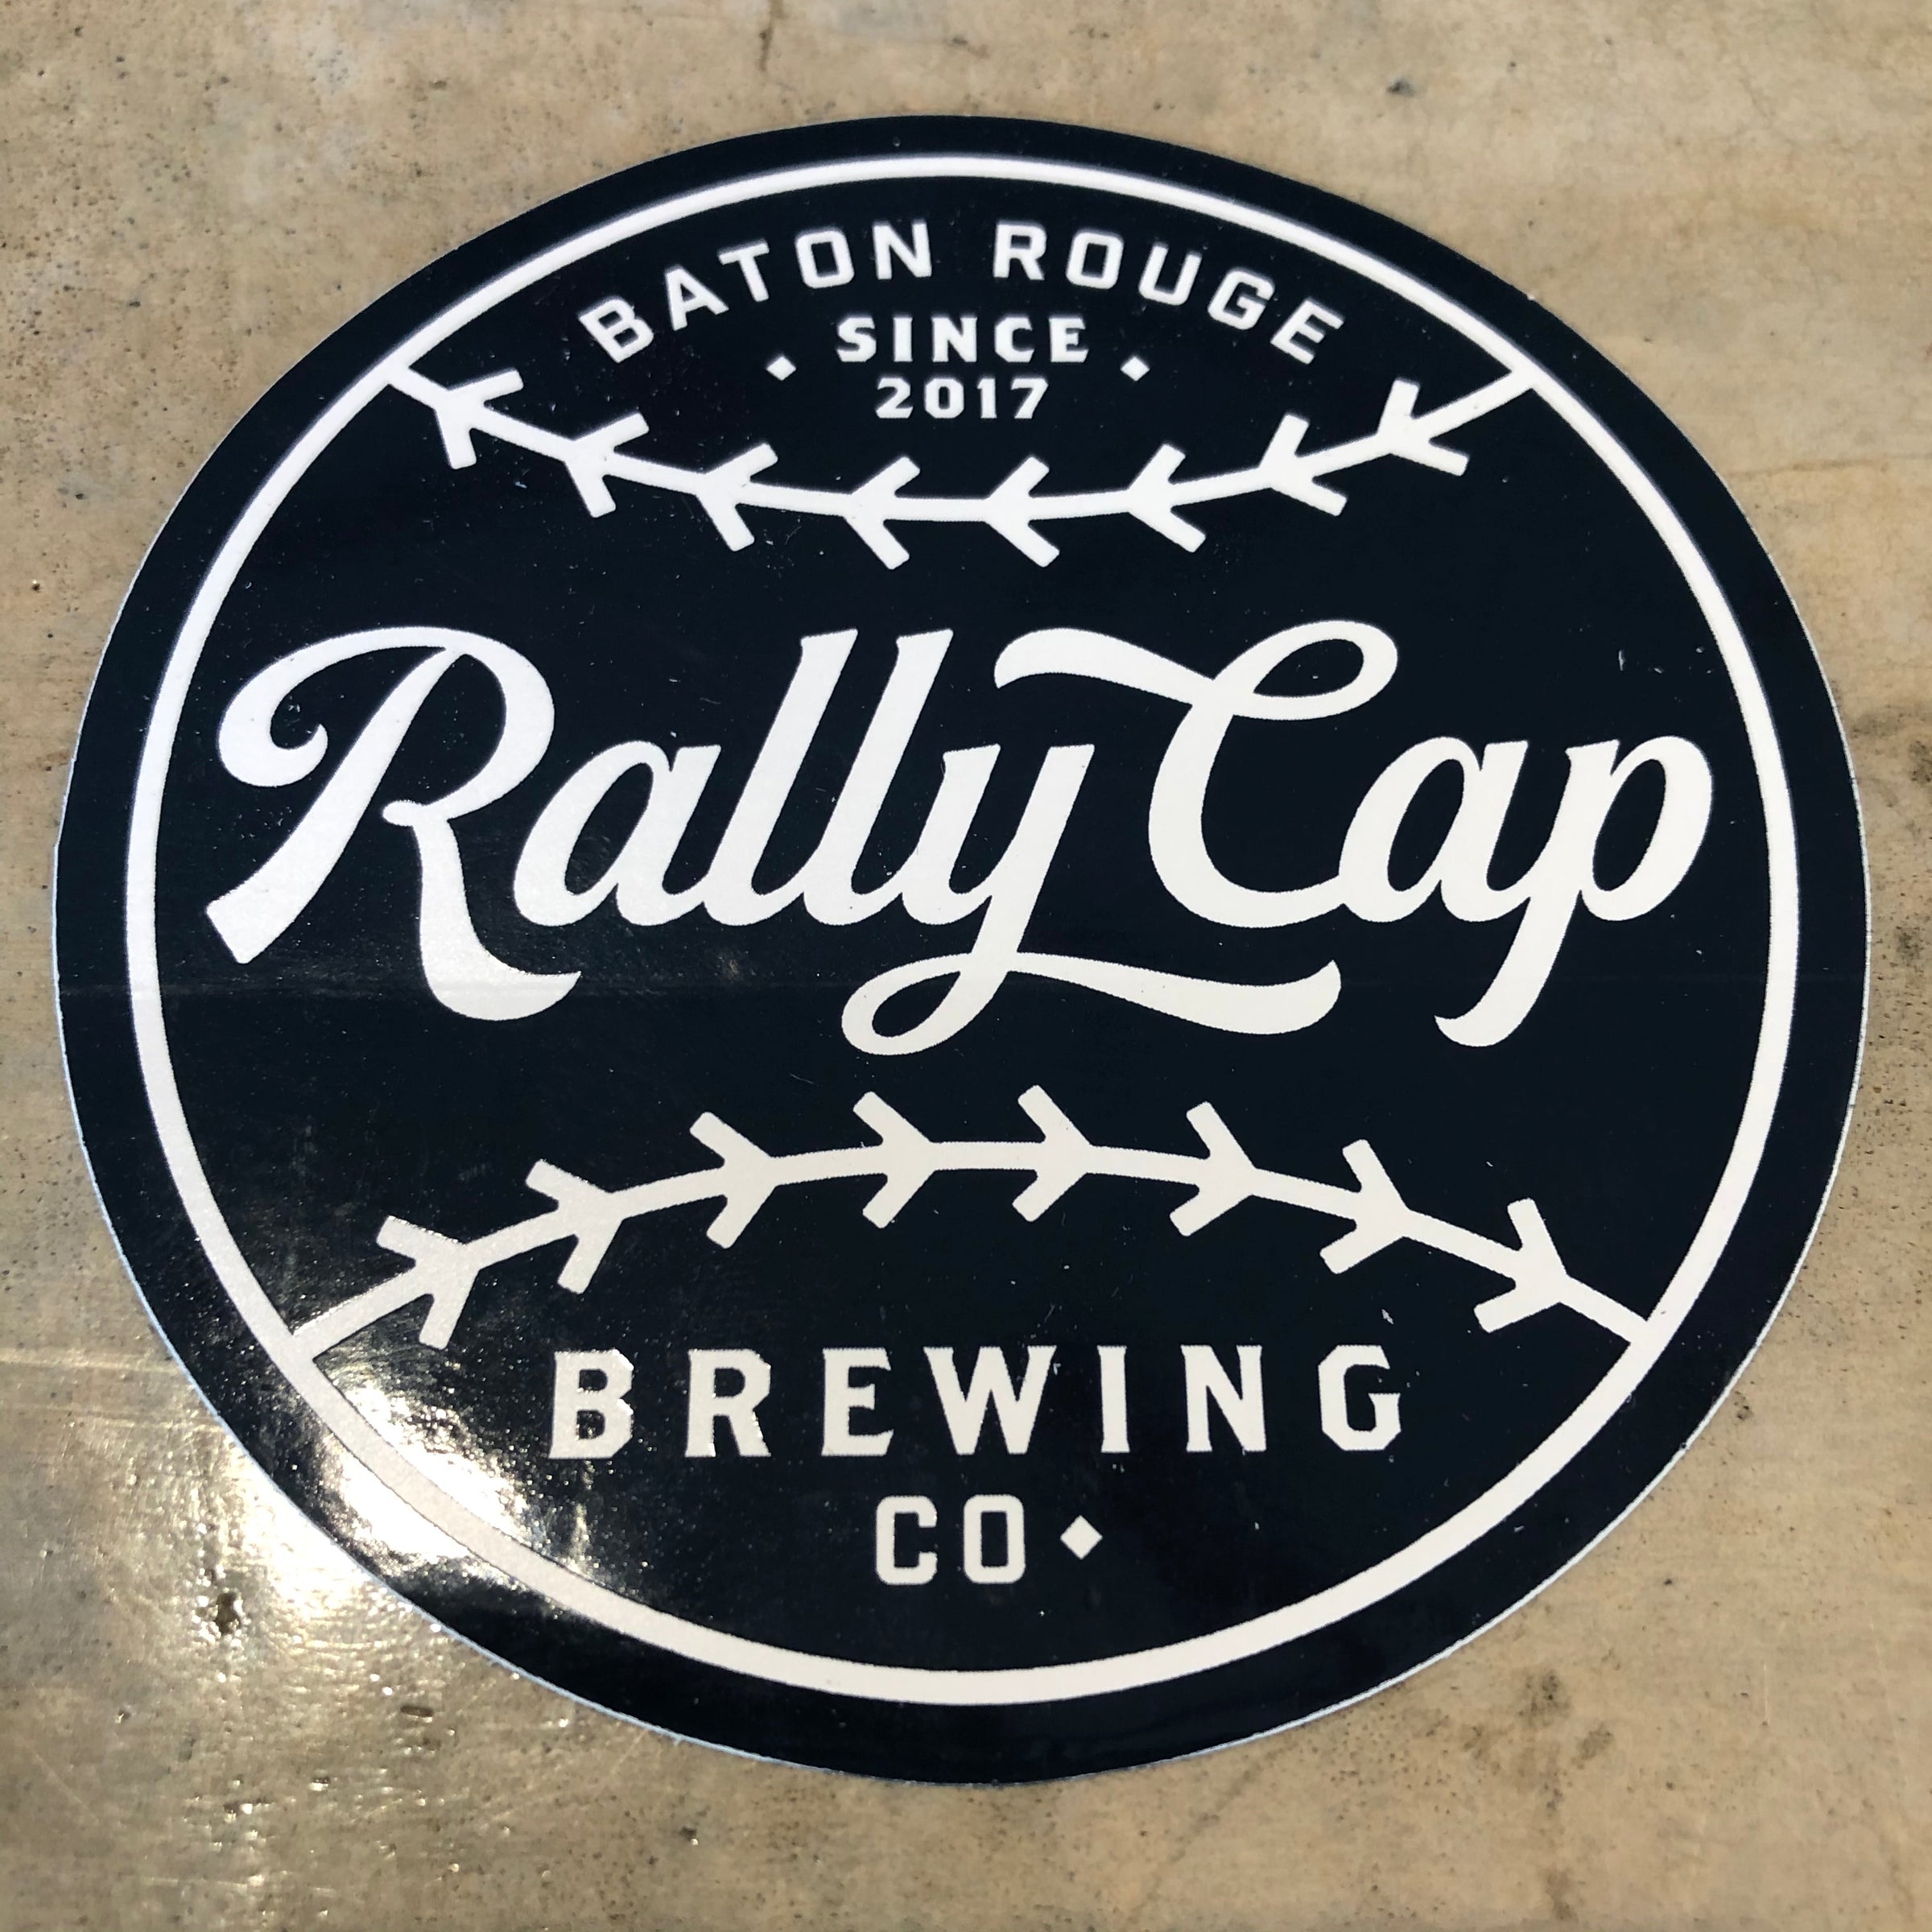 Rally Cap Brewing Company